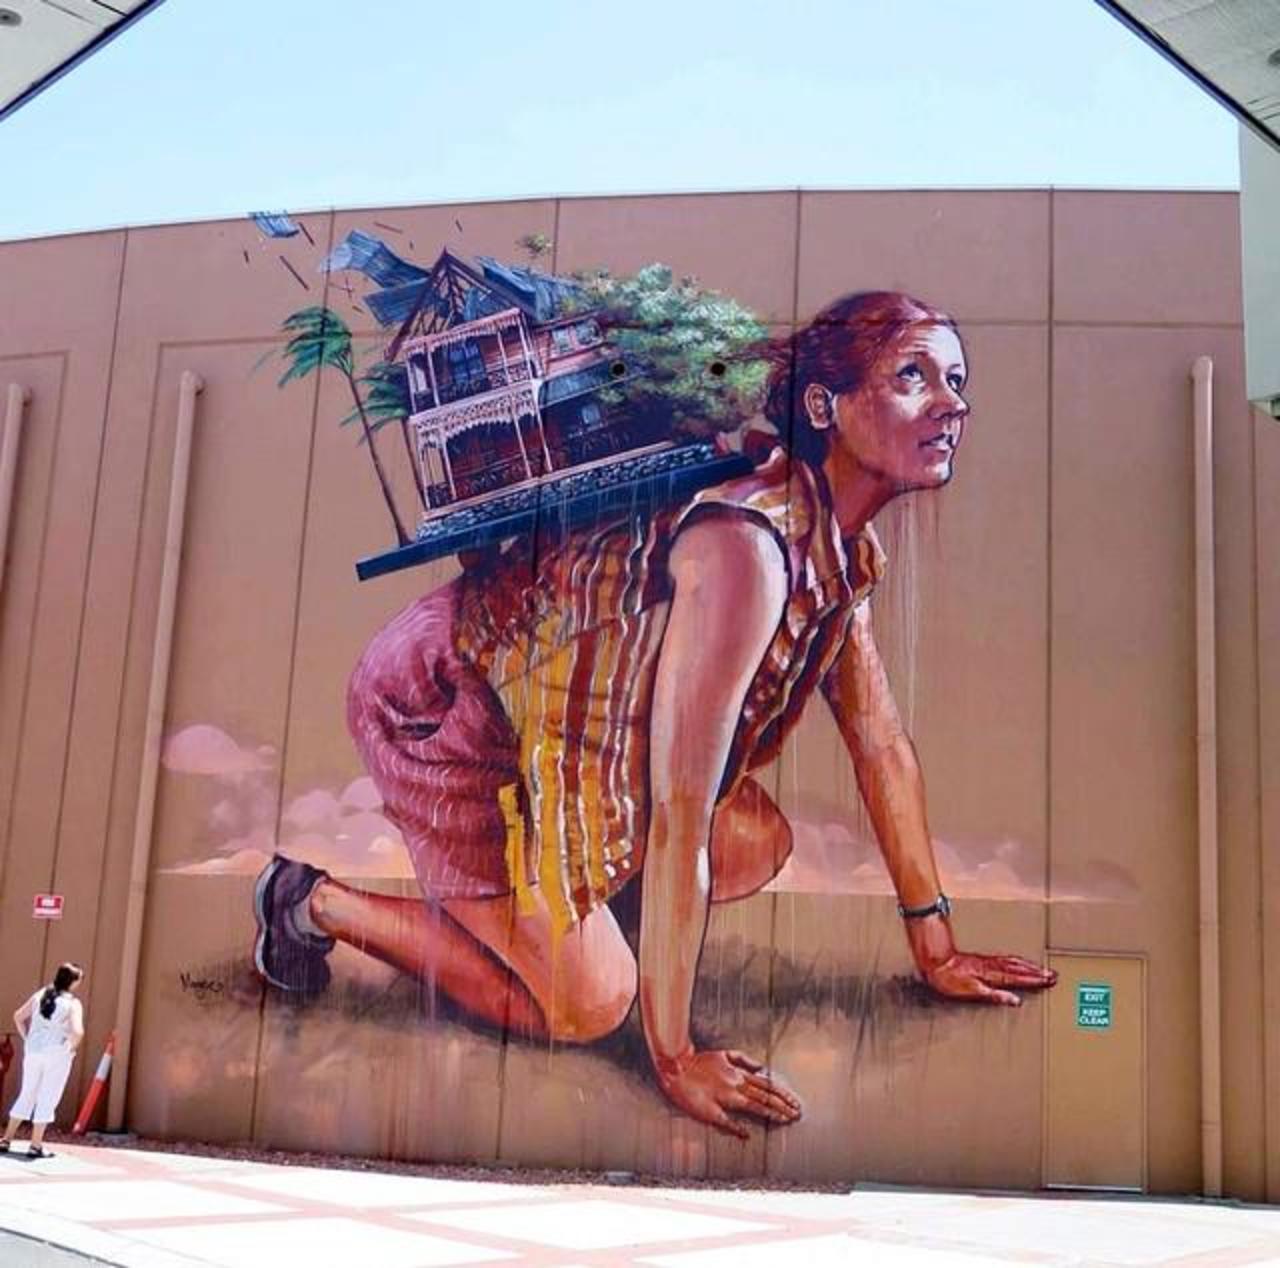 Latest Fintan Magee massive Street Art piece in Bunbury, Western Australia 

#art #graffiti #mural #streetart http://t.co/V7eRrO7Hc9 From…